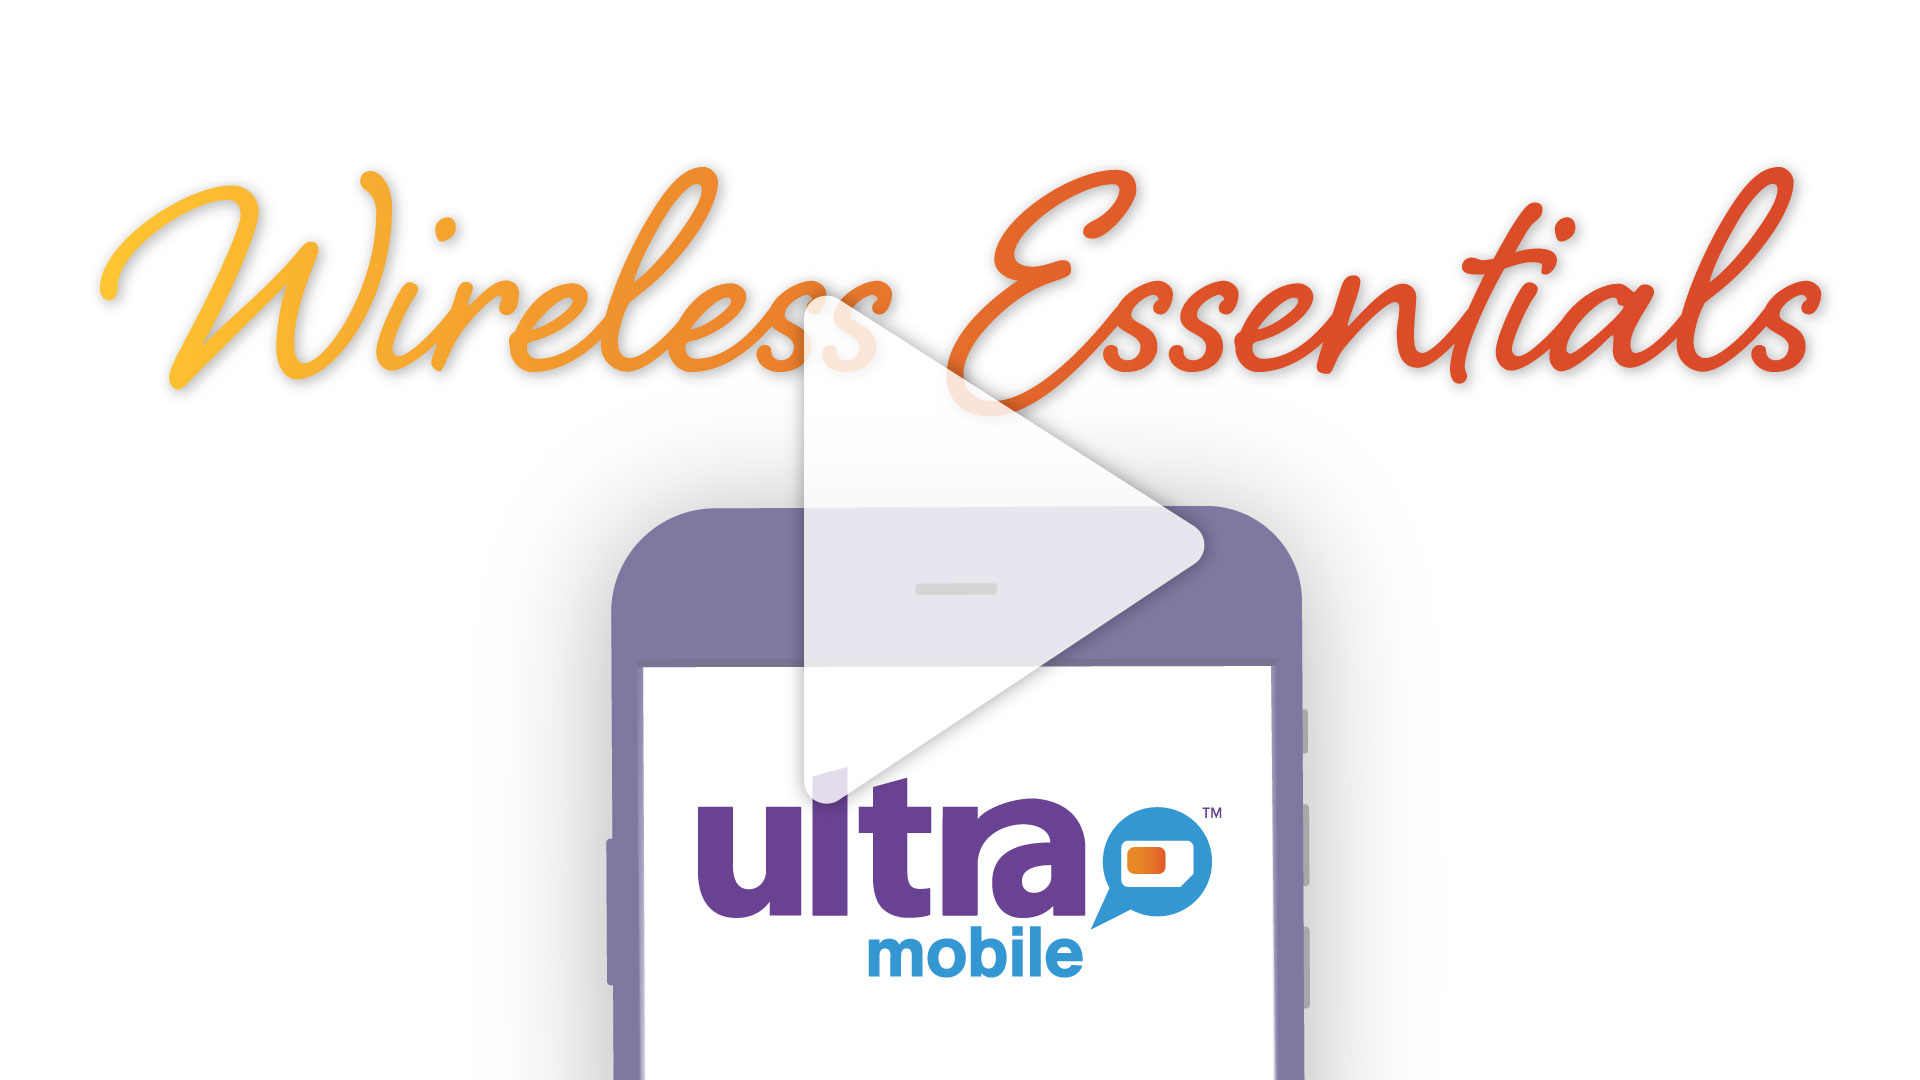 ultra mobile wireless